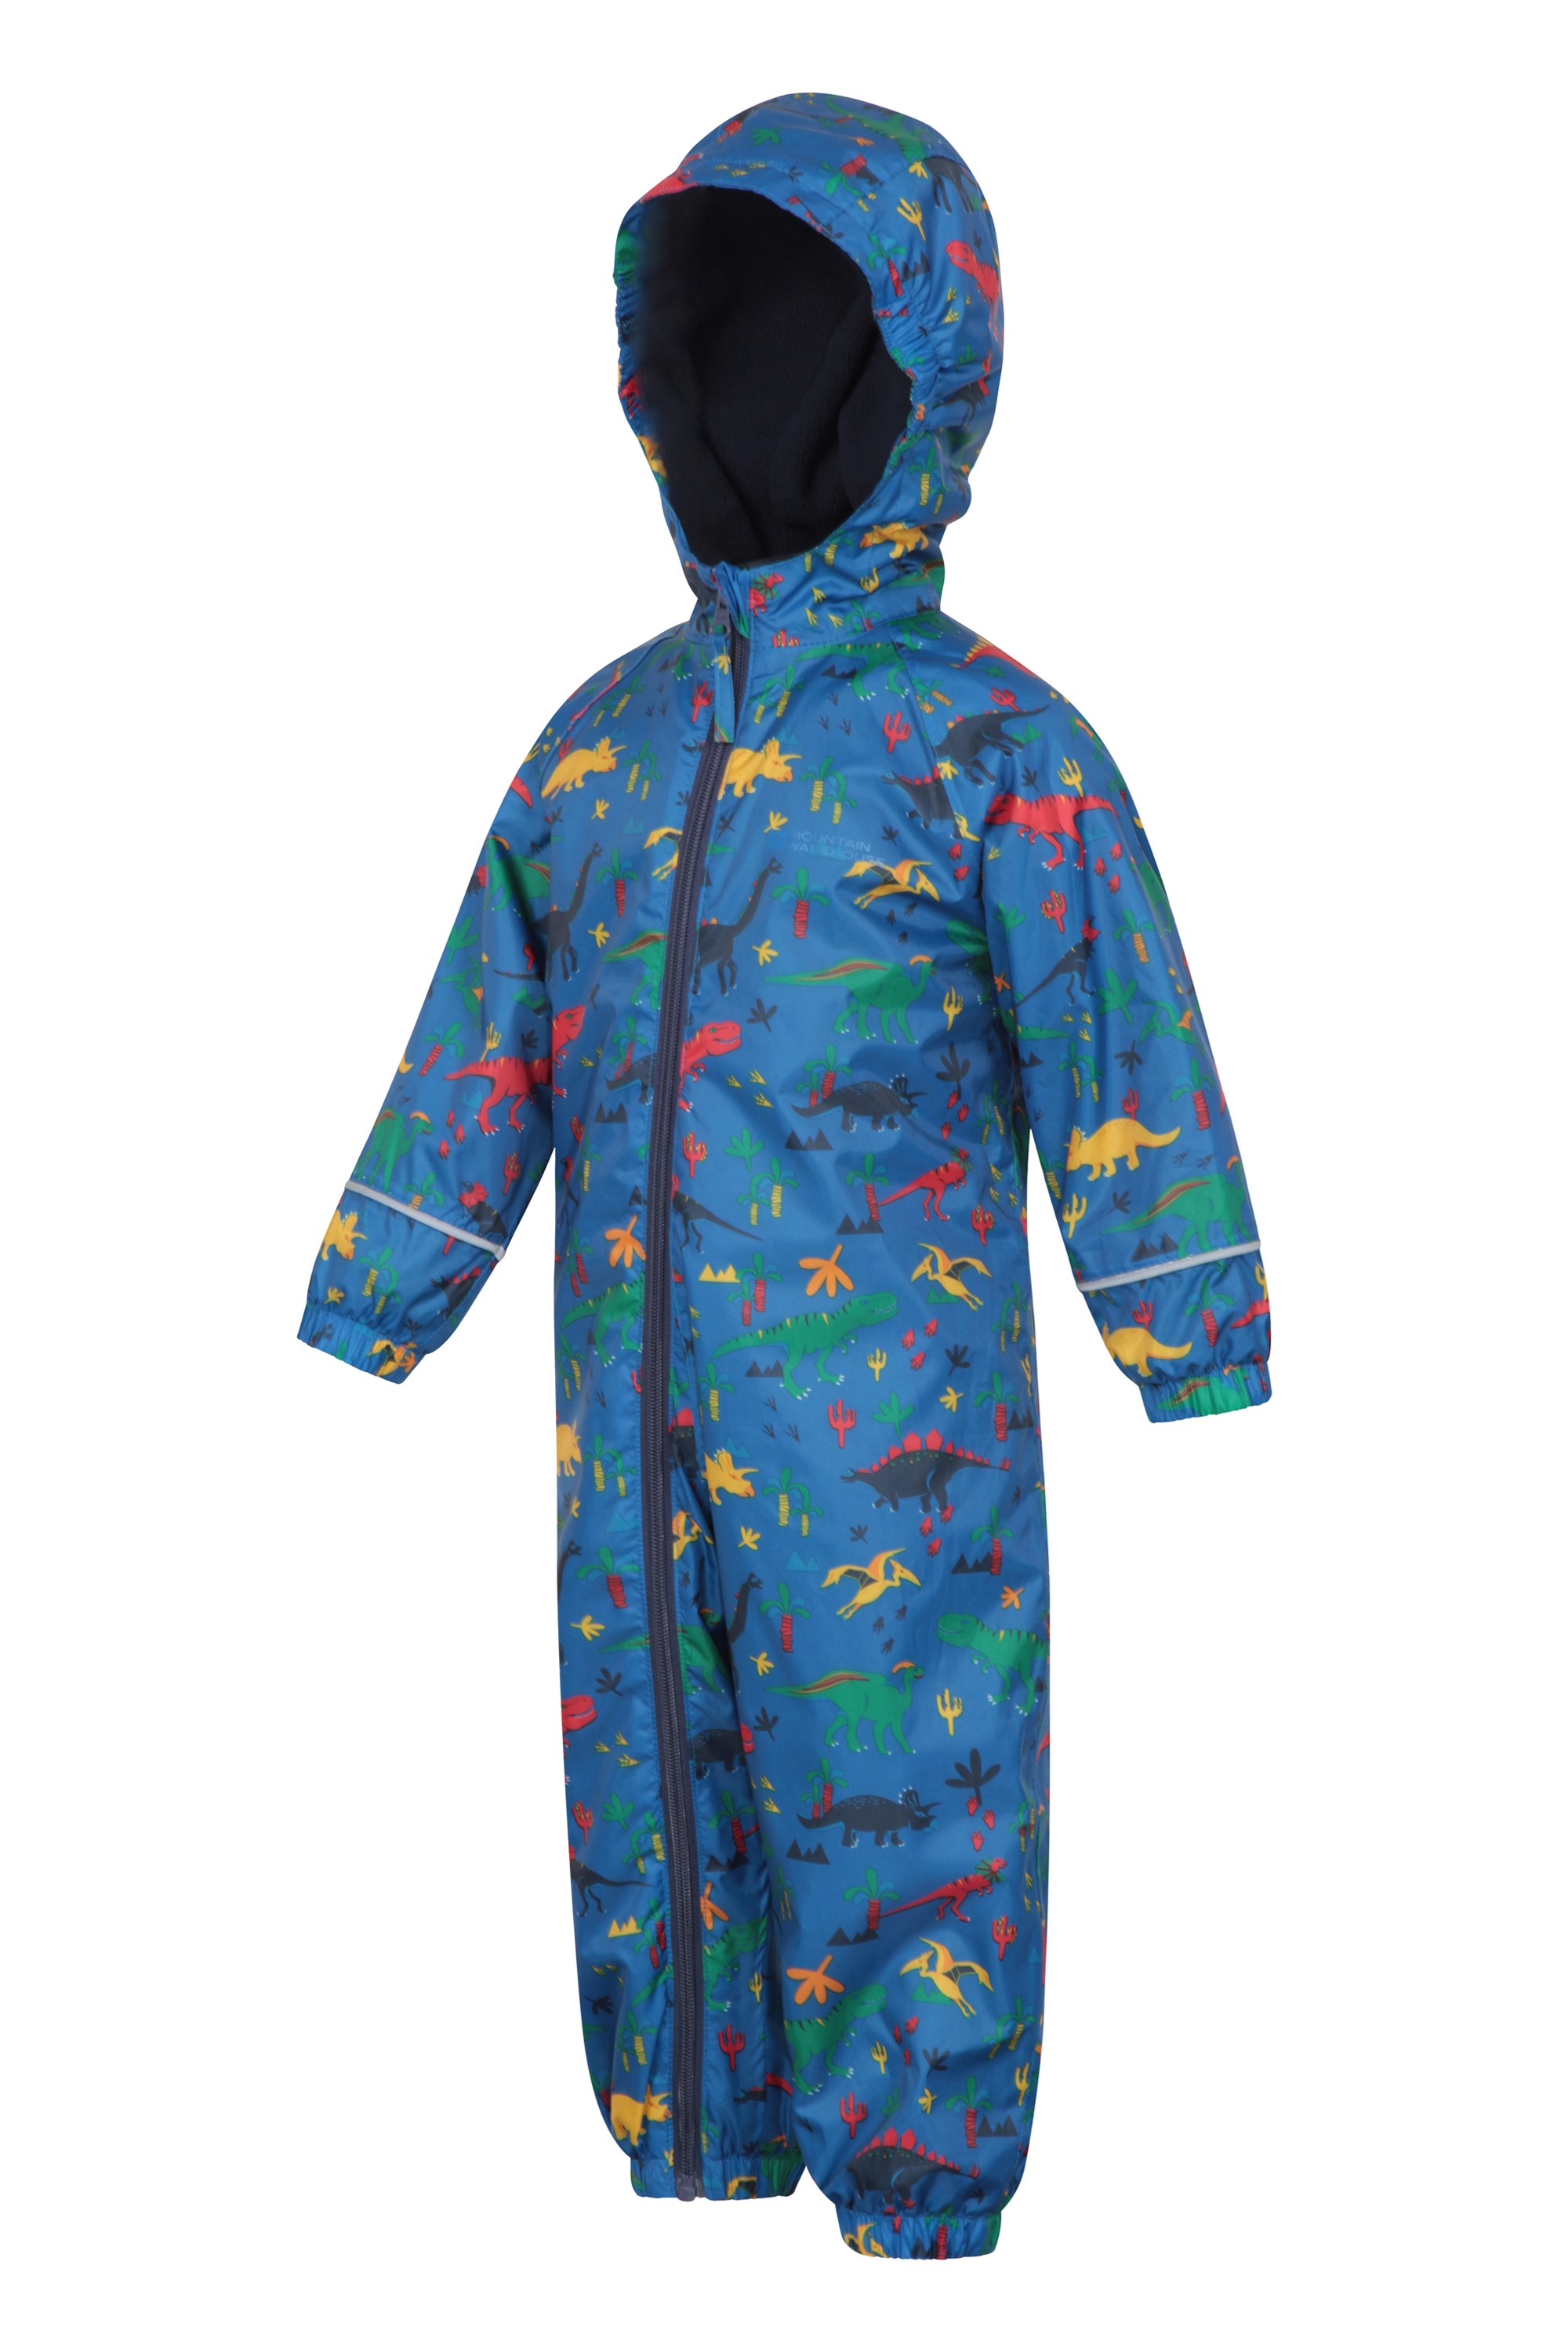 Wasserfest Mountain Warehouse Spright Bedruckter Regenanzug Atmungsaktiv Für Jungen und Mädchen Frühling Fleecefutter versiegelte Nähte Anzug Gefüttert 